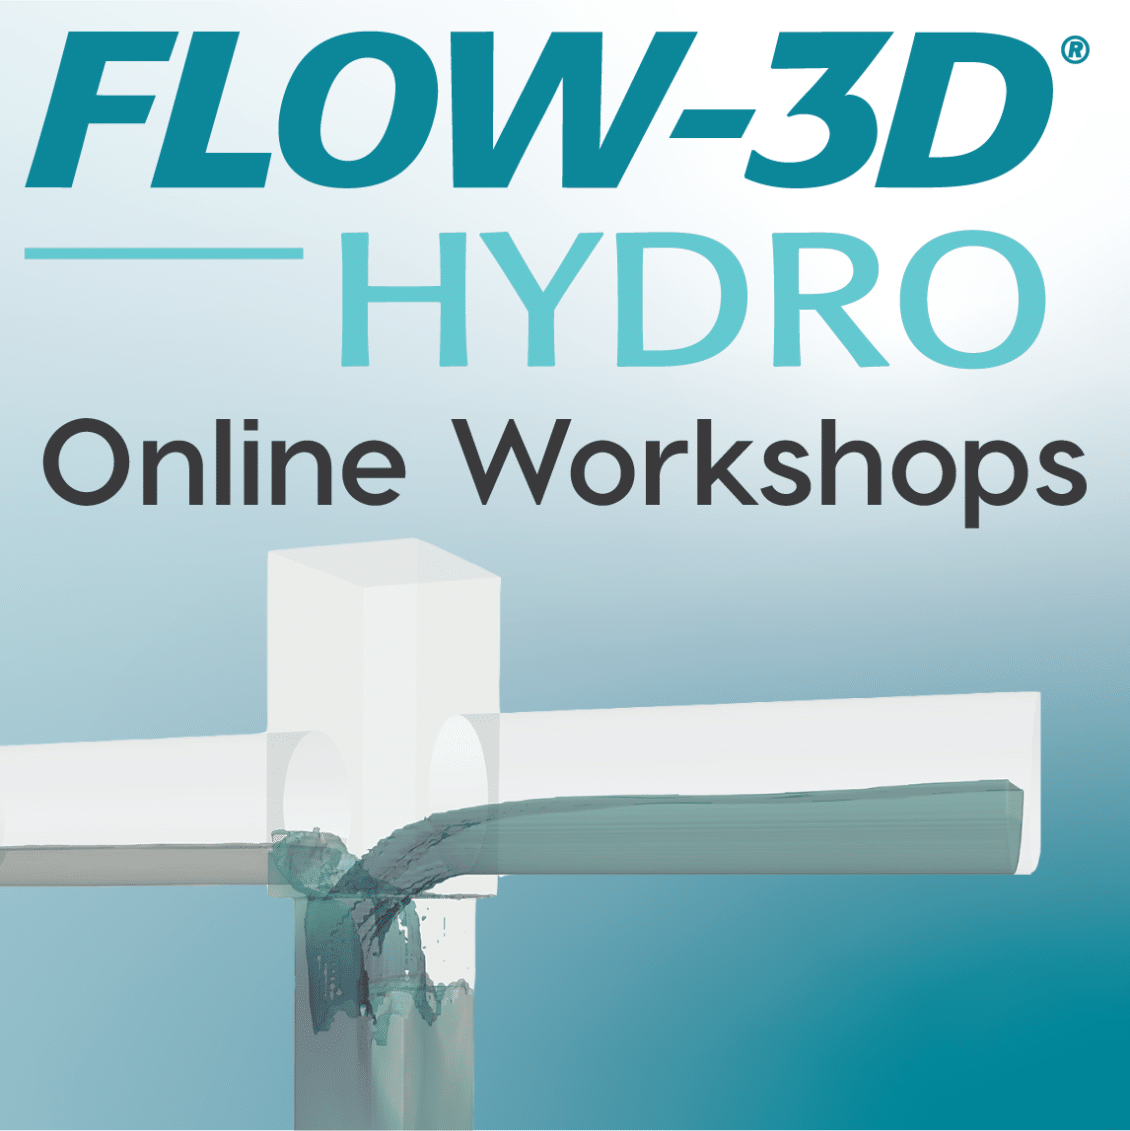 FLOW-3D HYDRO workshops